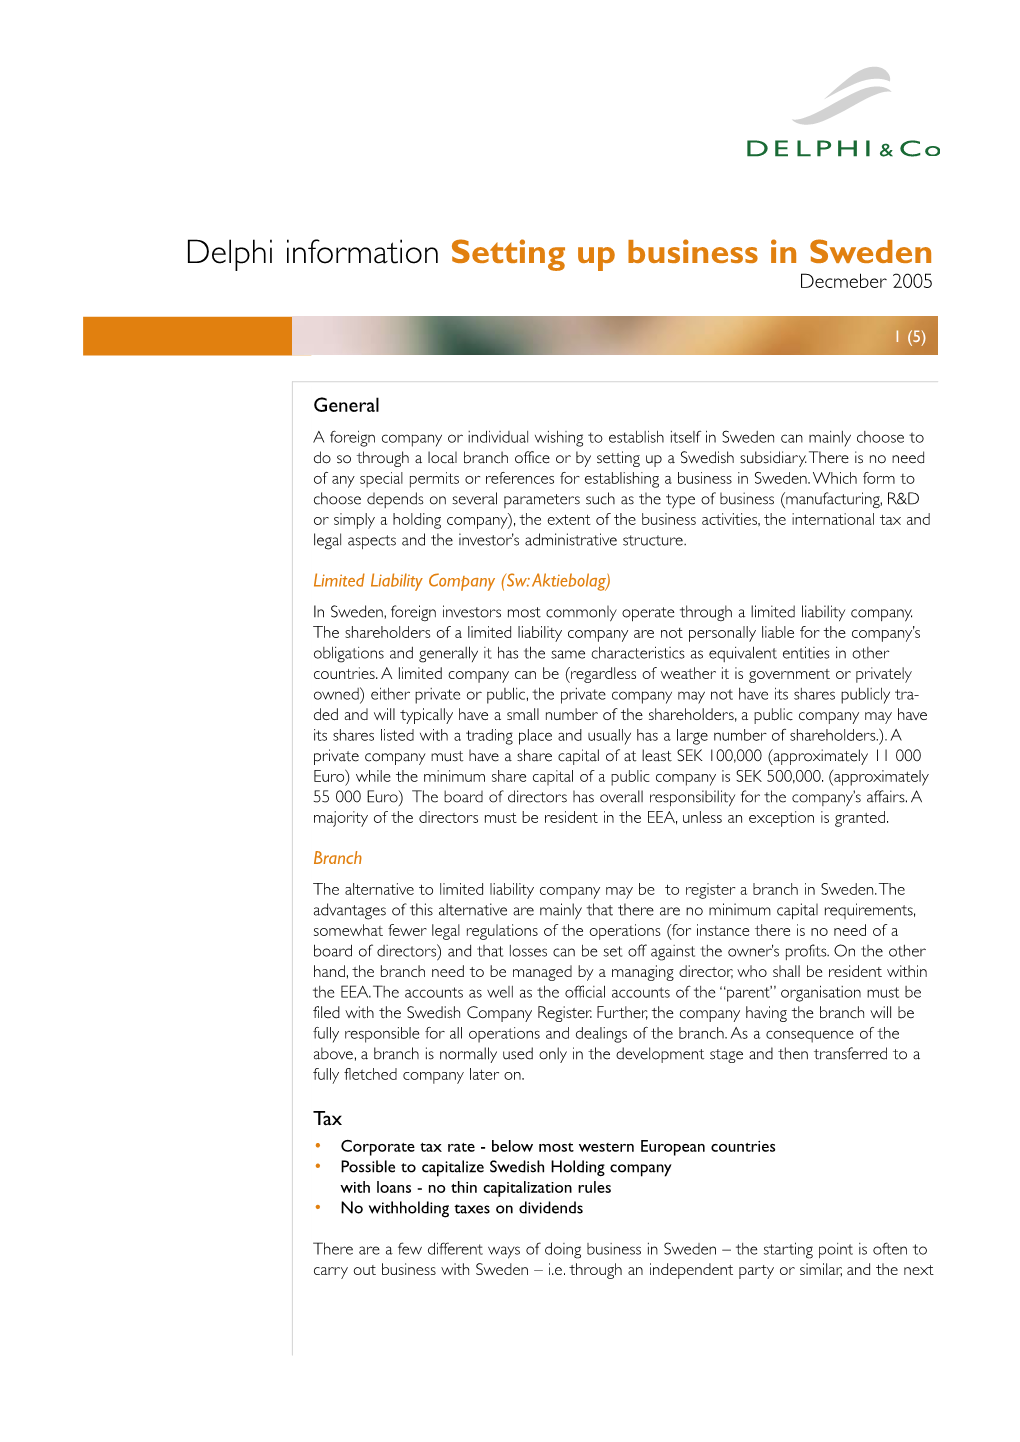 Setting up Business in Sweden Decmeber 2005